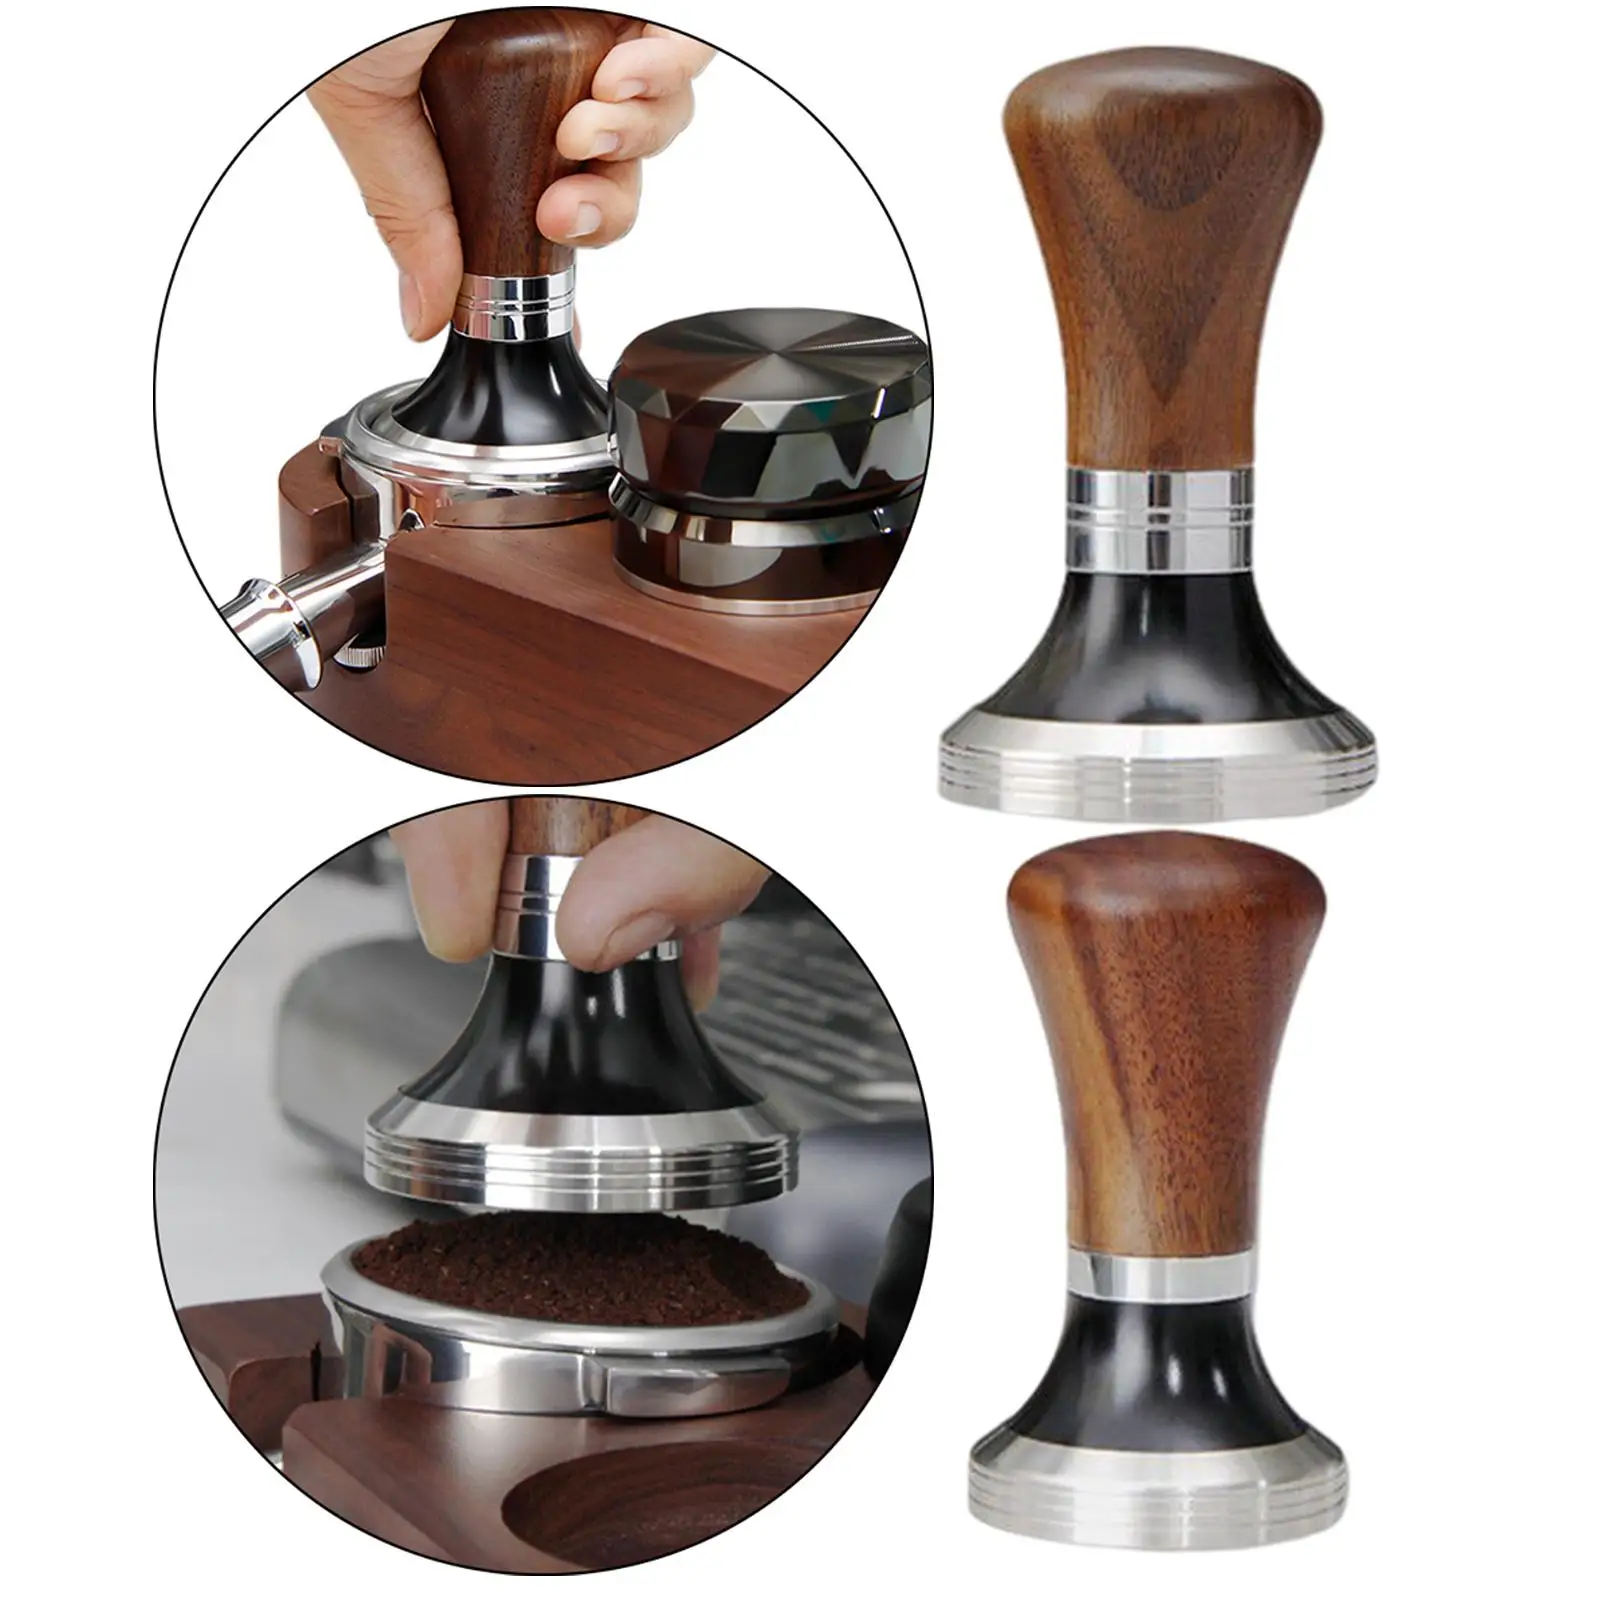 Aluminum Coffee tamper café de distribución leveler herramienta 58mm mango ajustable 